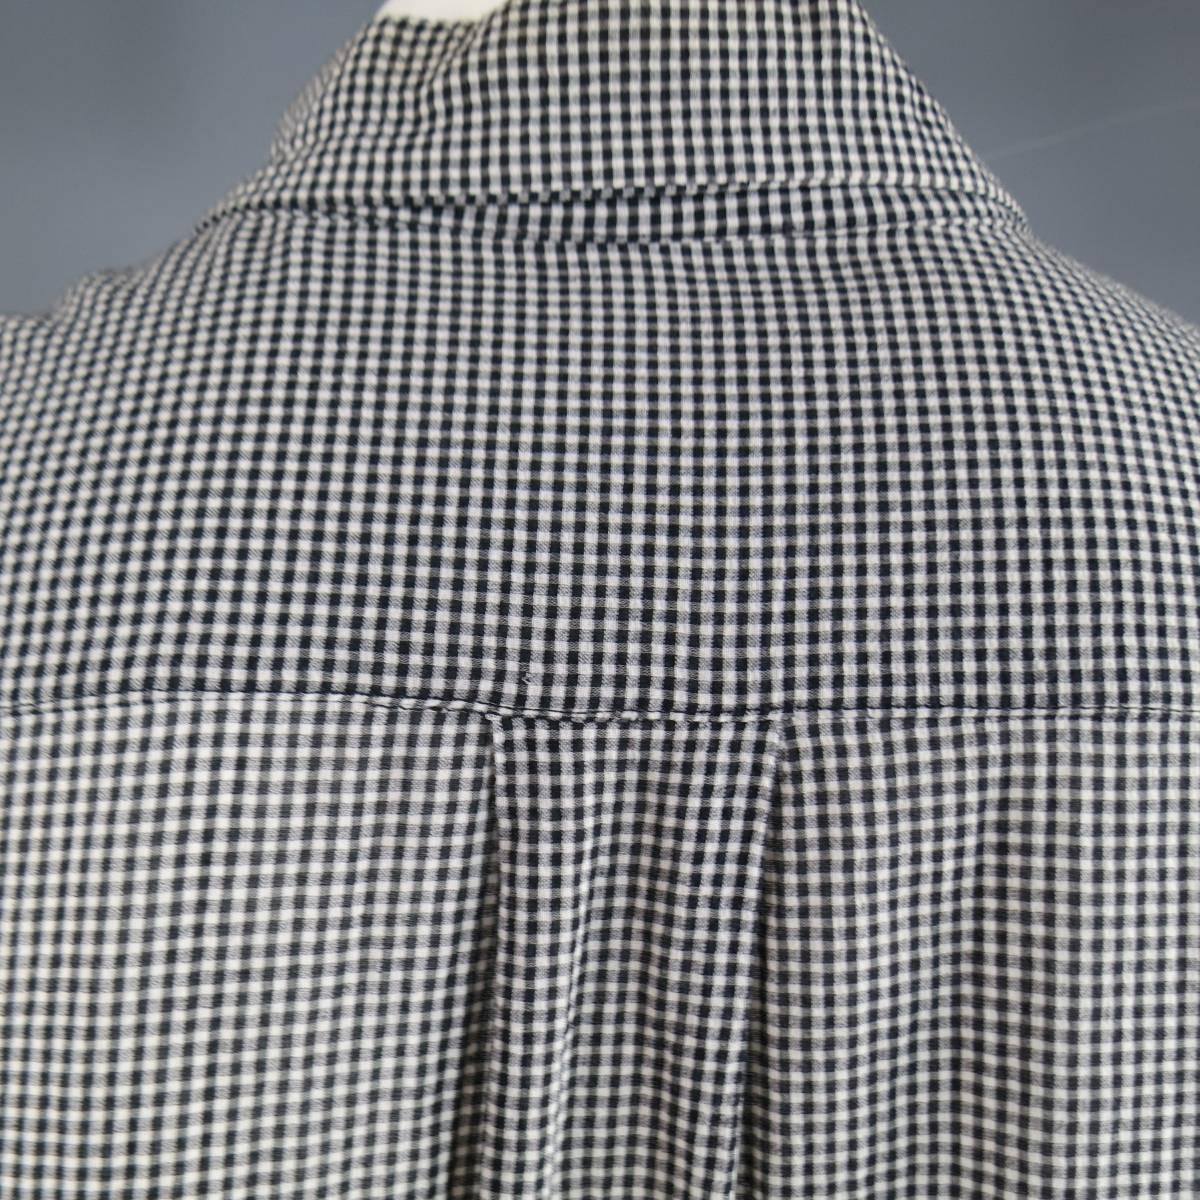 ANN DEMEULEMEESTER M Black & White Plaid Cotton / Silk Long Sleeve Tie Shirt 3